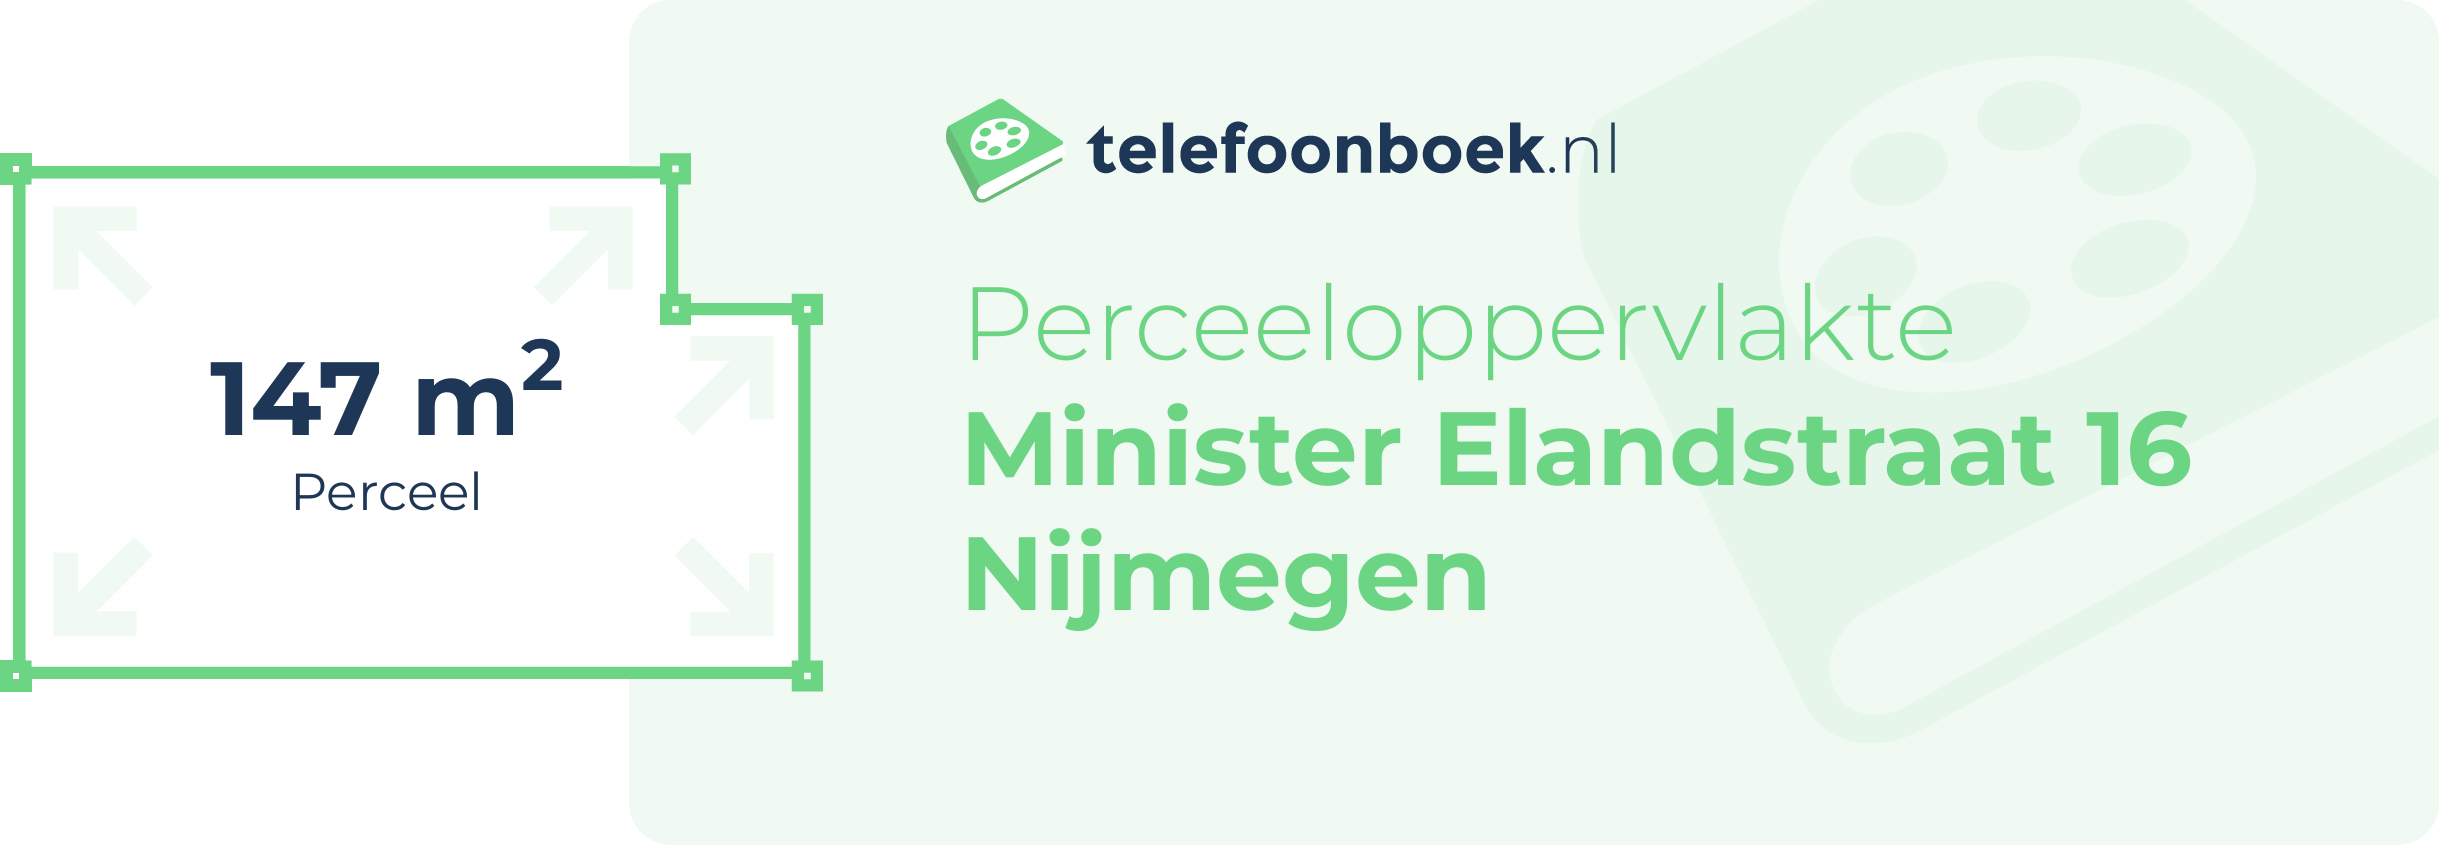 Perceeloppervlakte Minister Elandstraat 16 Nijmegen